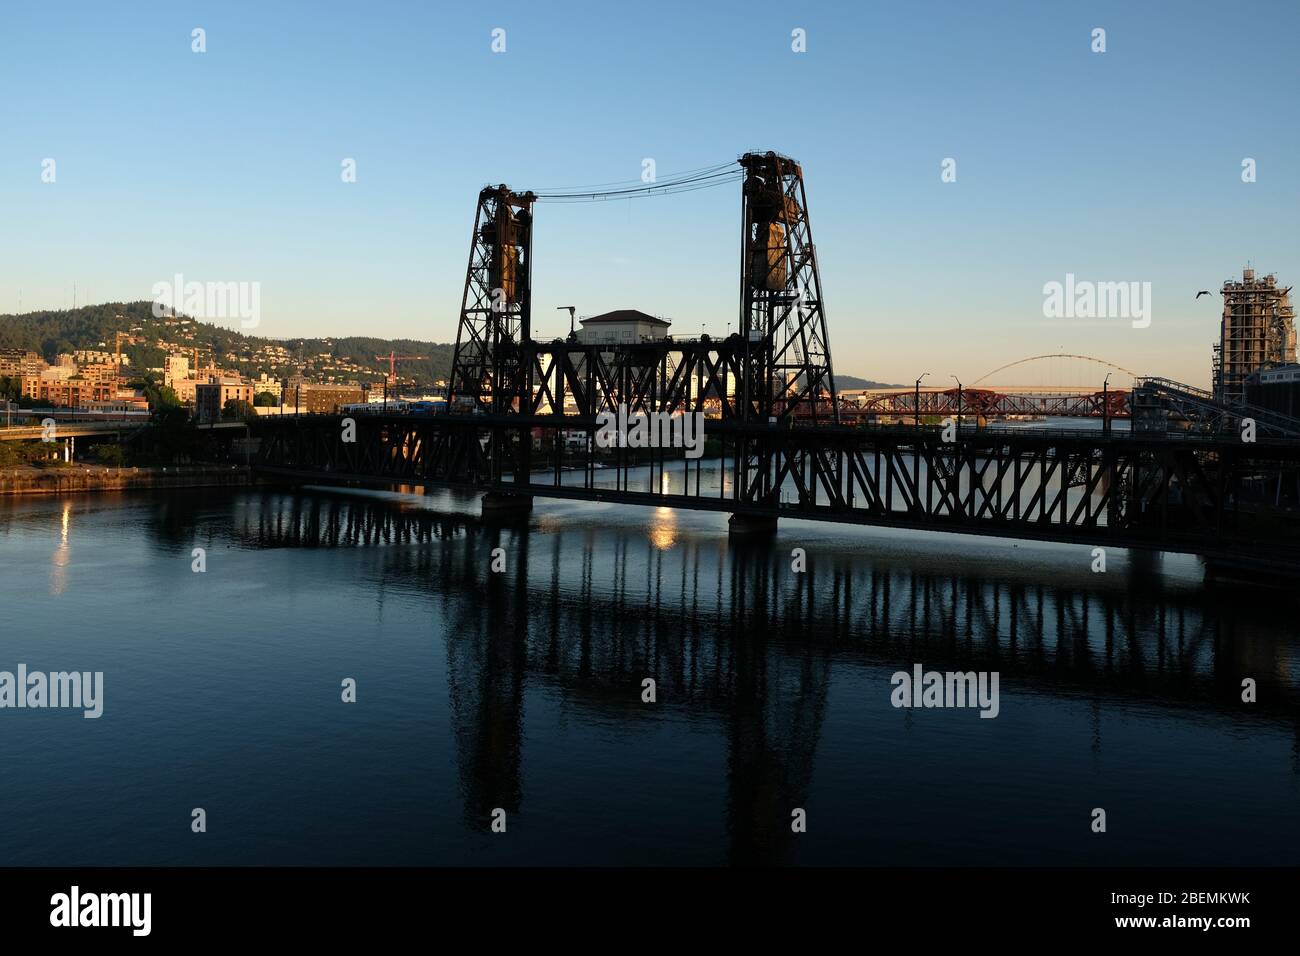 View of the unique historic telescoping rail and road lift steel bridge over the Willamette River in downtown Portland, Oregon Stock Photo